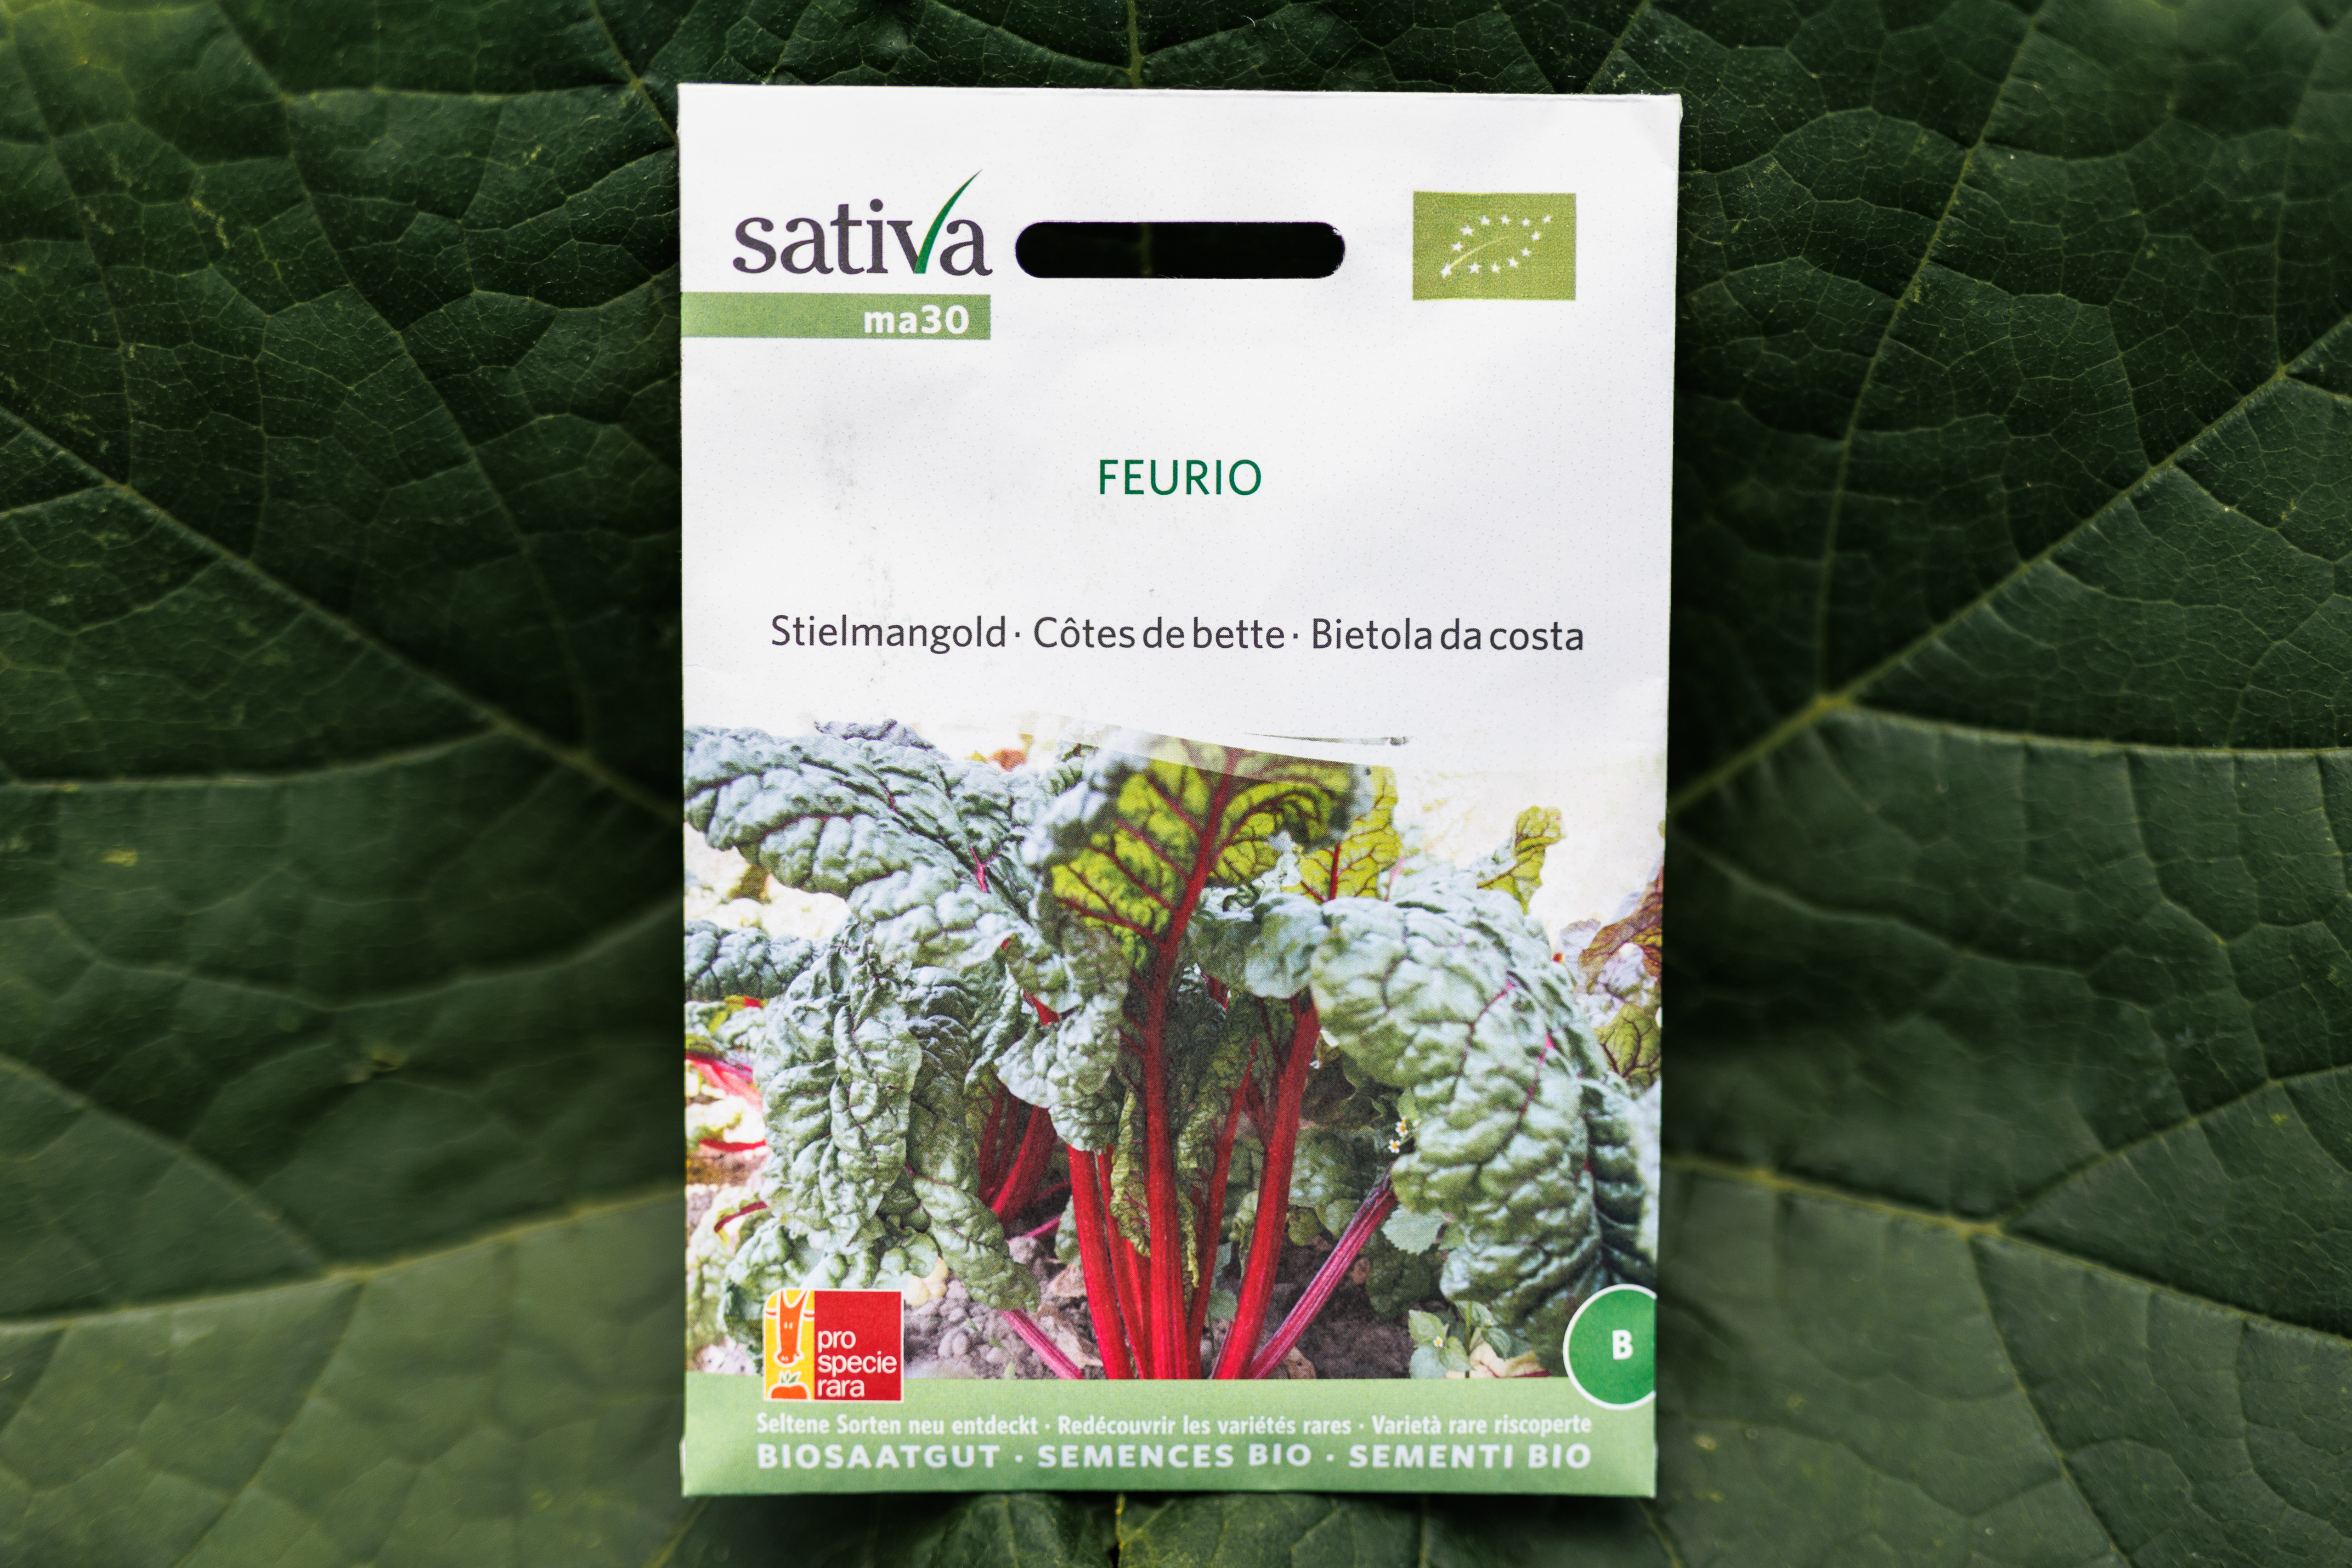 Sativa biosaatgut - Mangold Feurio